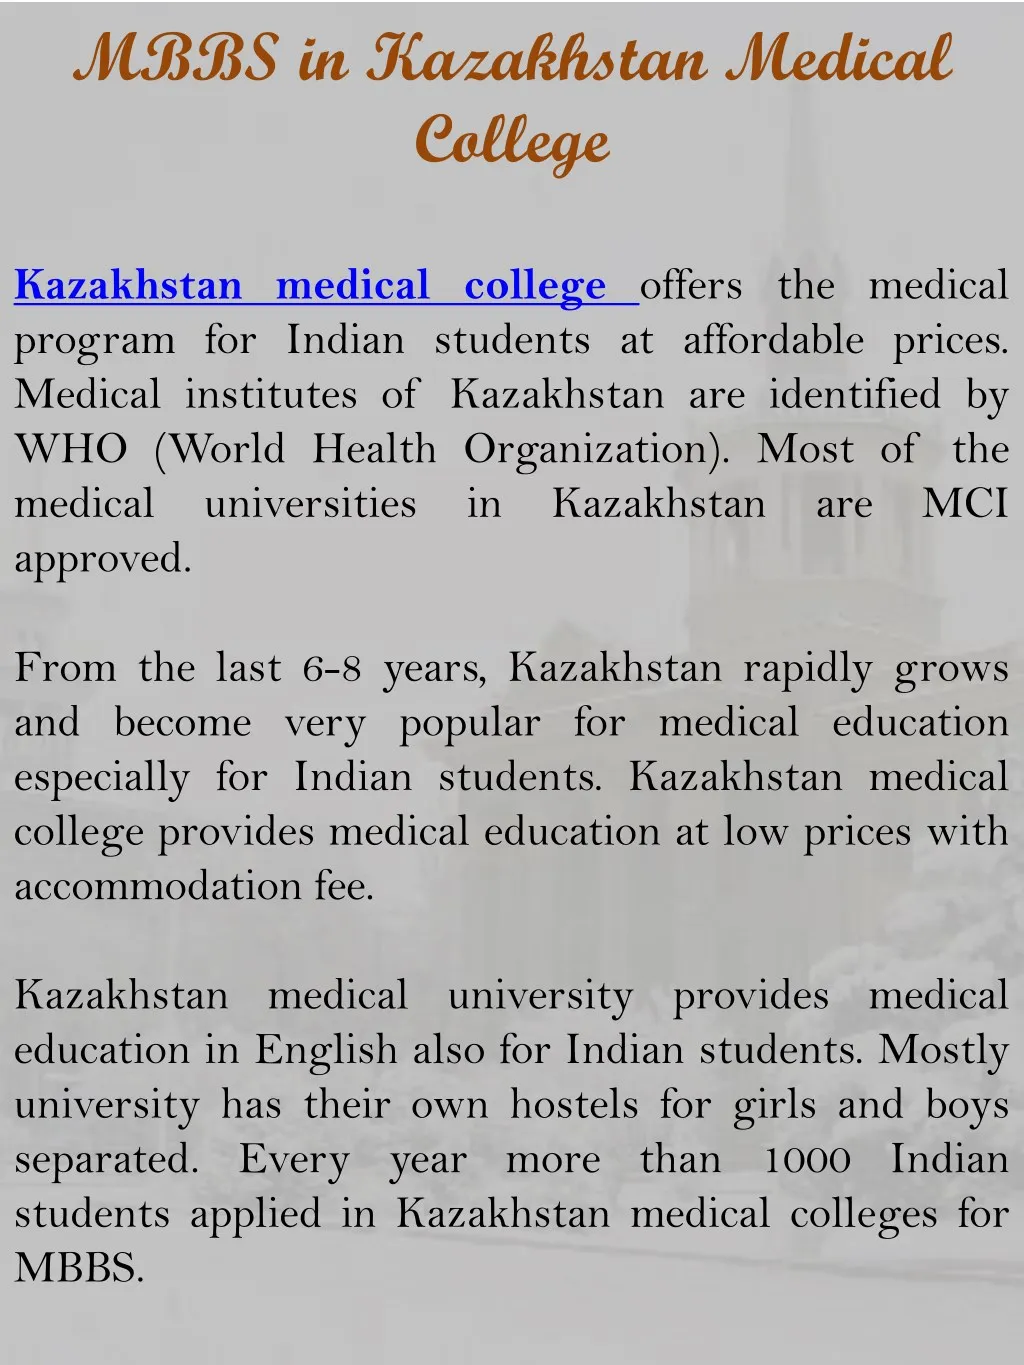 mbbs in kazakhstan medical college